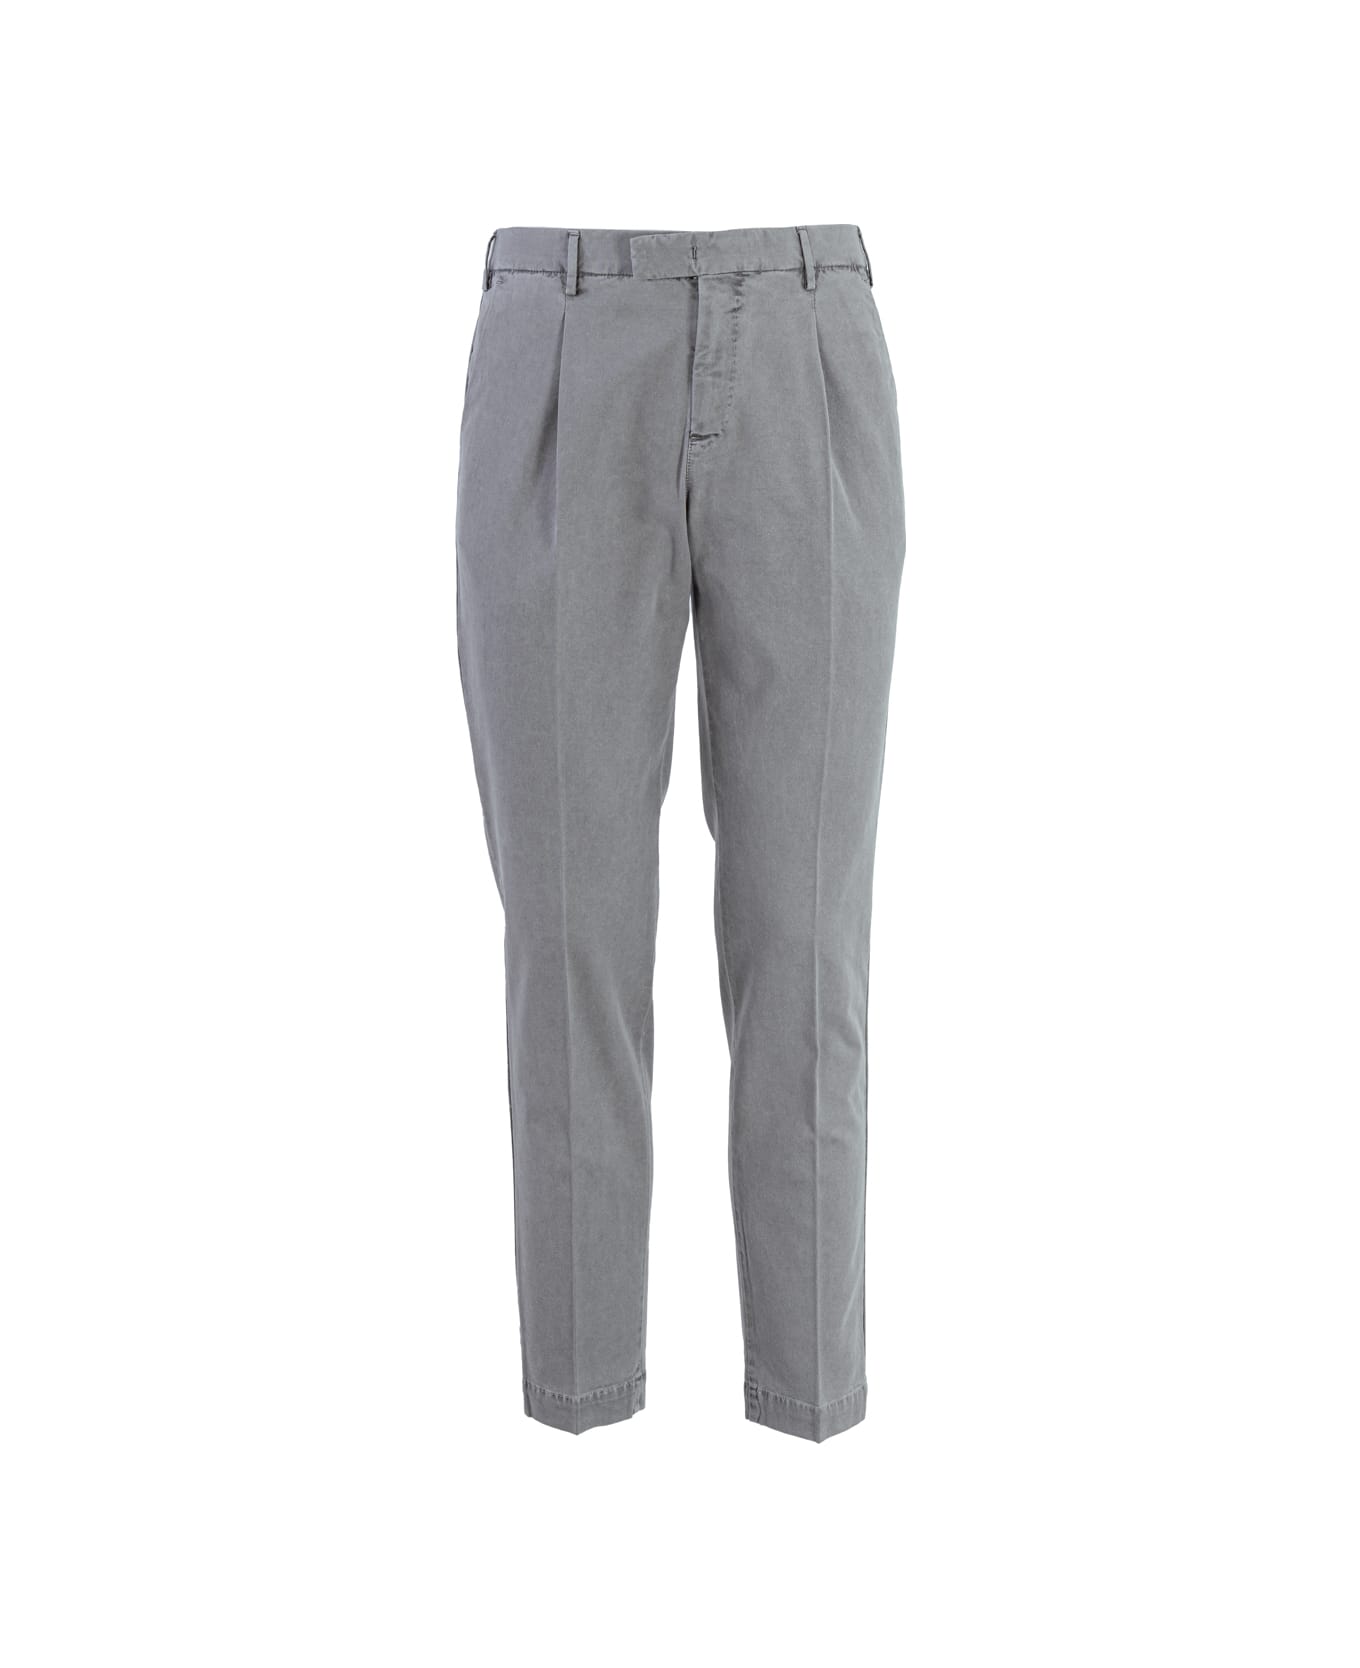 PT Torino Pt01 Trousers Grey - Grey